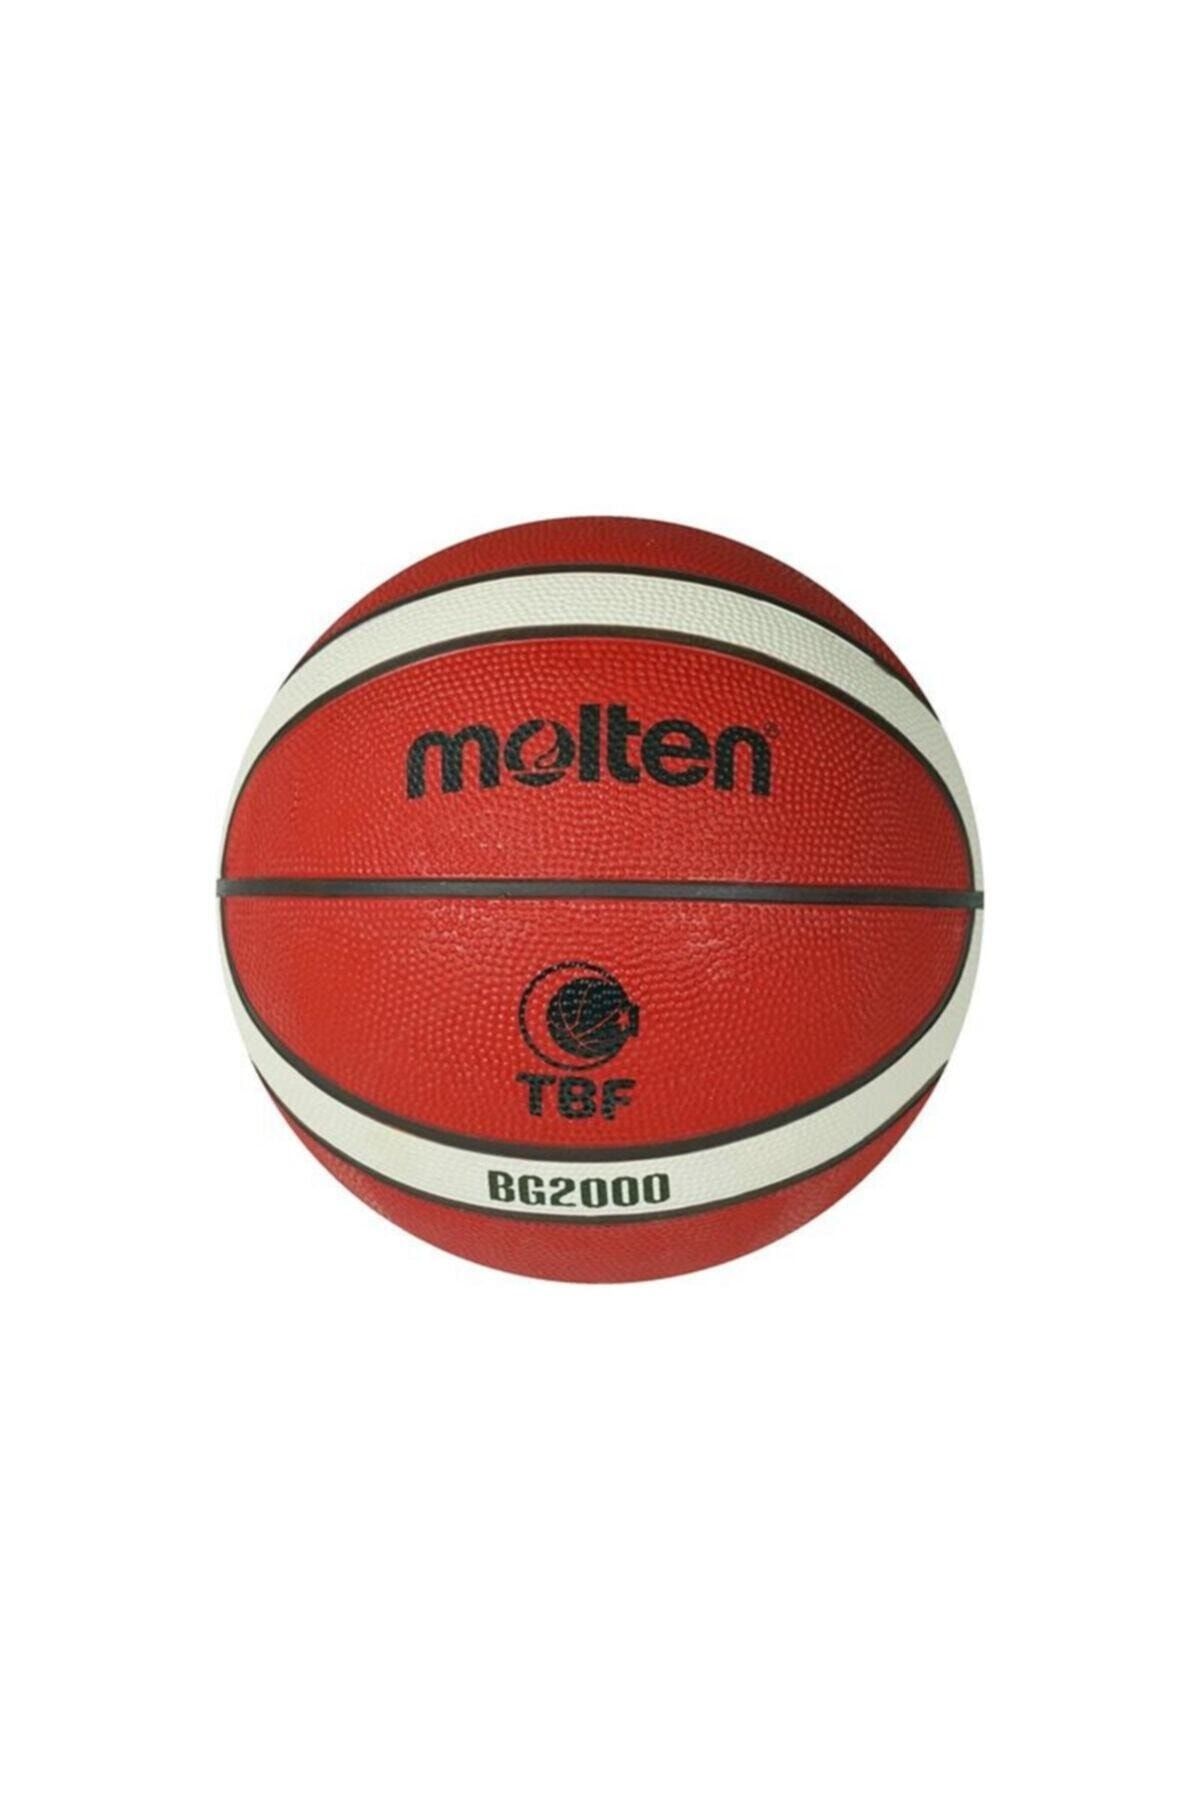 Molten B6g2000 Fıba Onaylı 6 Numara Kauçuk Basketbol Topu